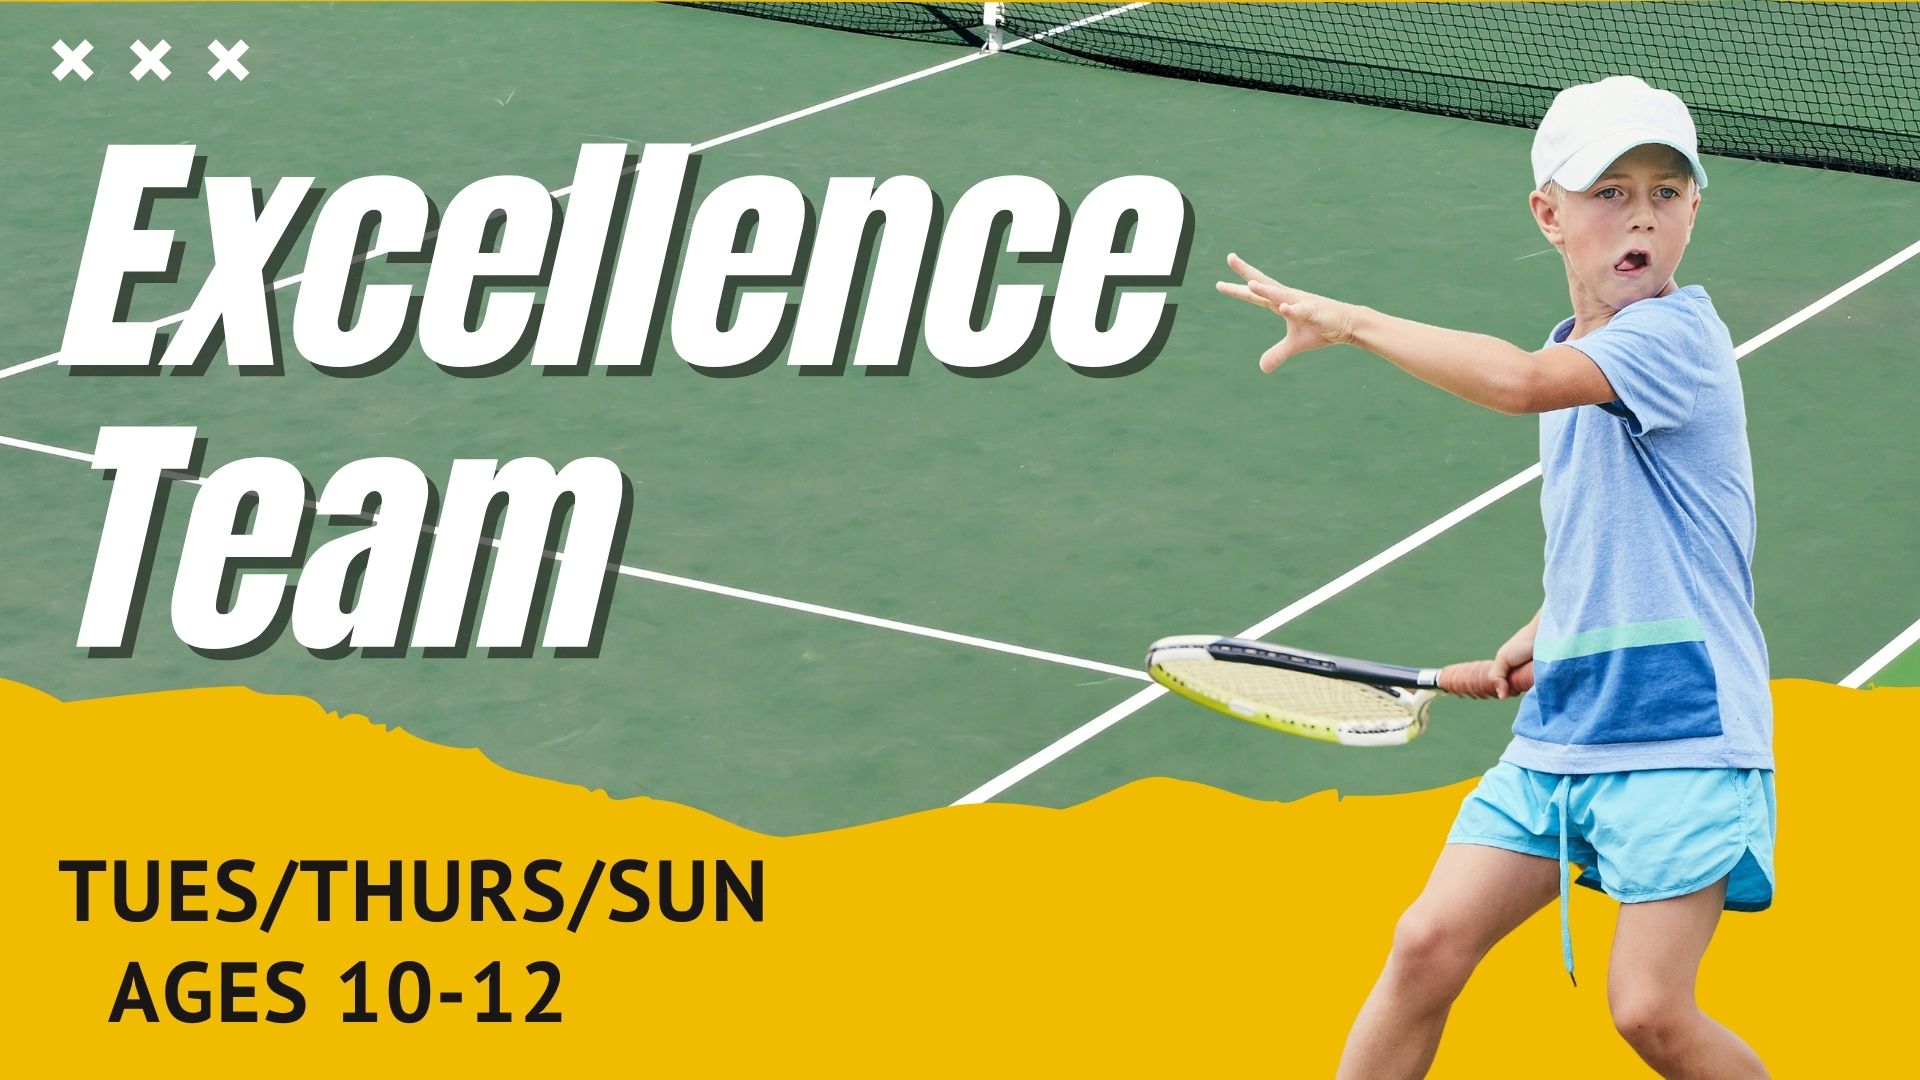 Excellence Team, Kids Tennis